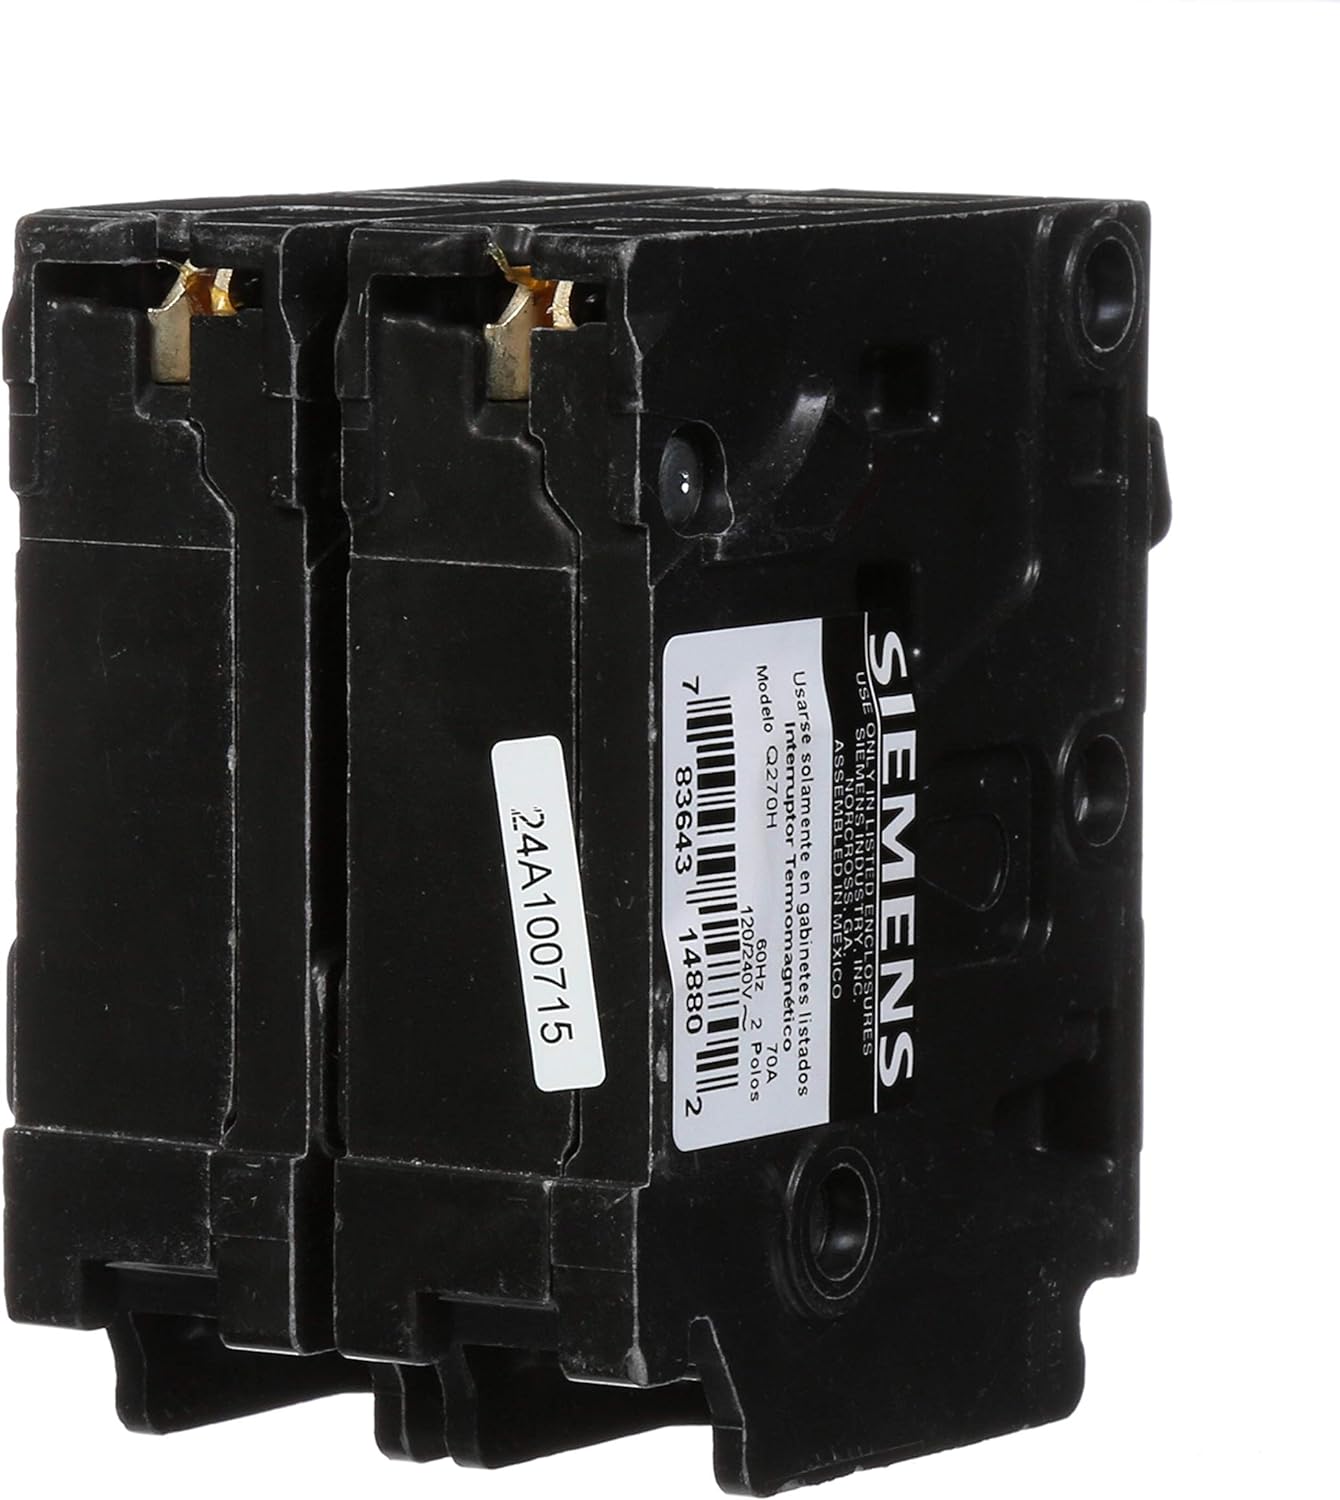 Q2100H - Siemens - 100 Amp Molded Case Circuit Breaker